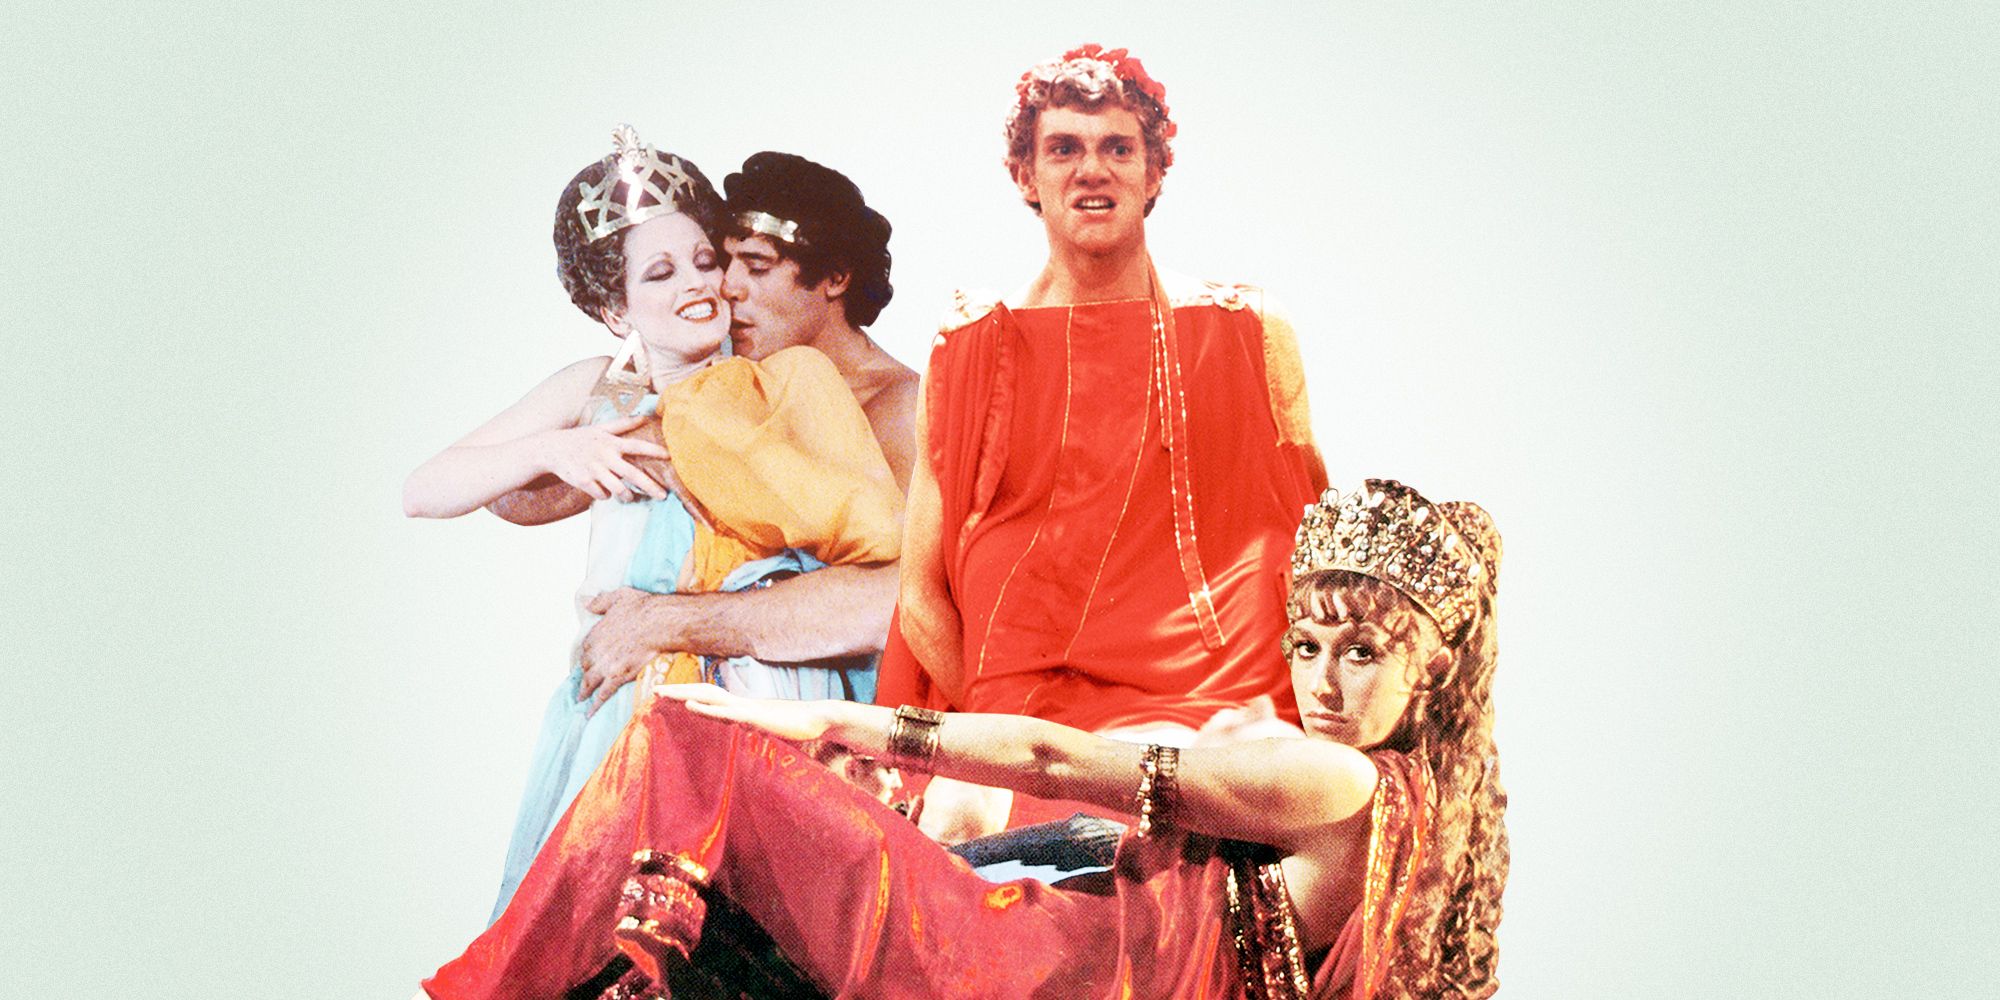 Caligula Movie Orgy